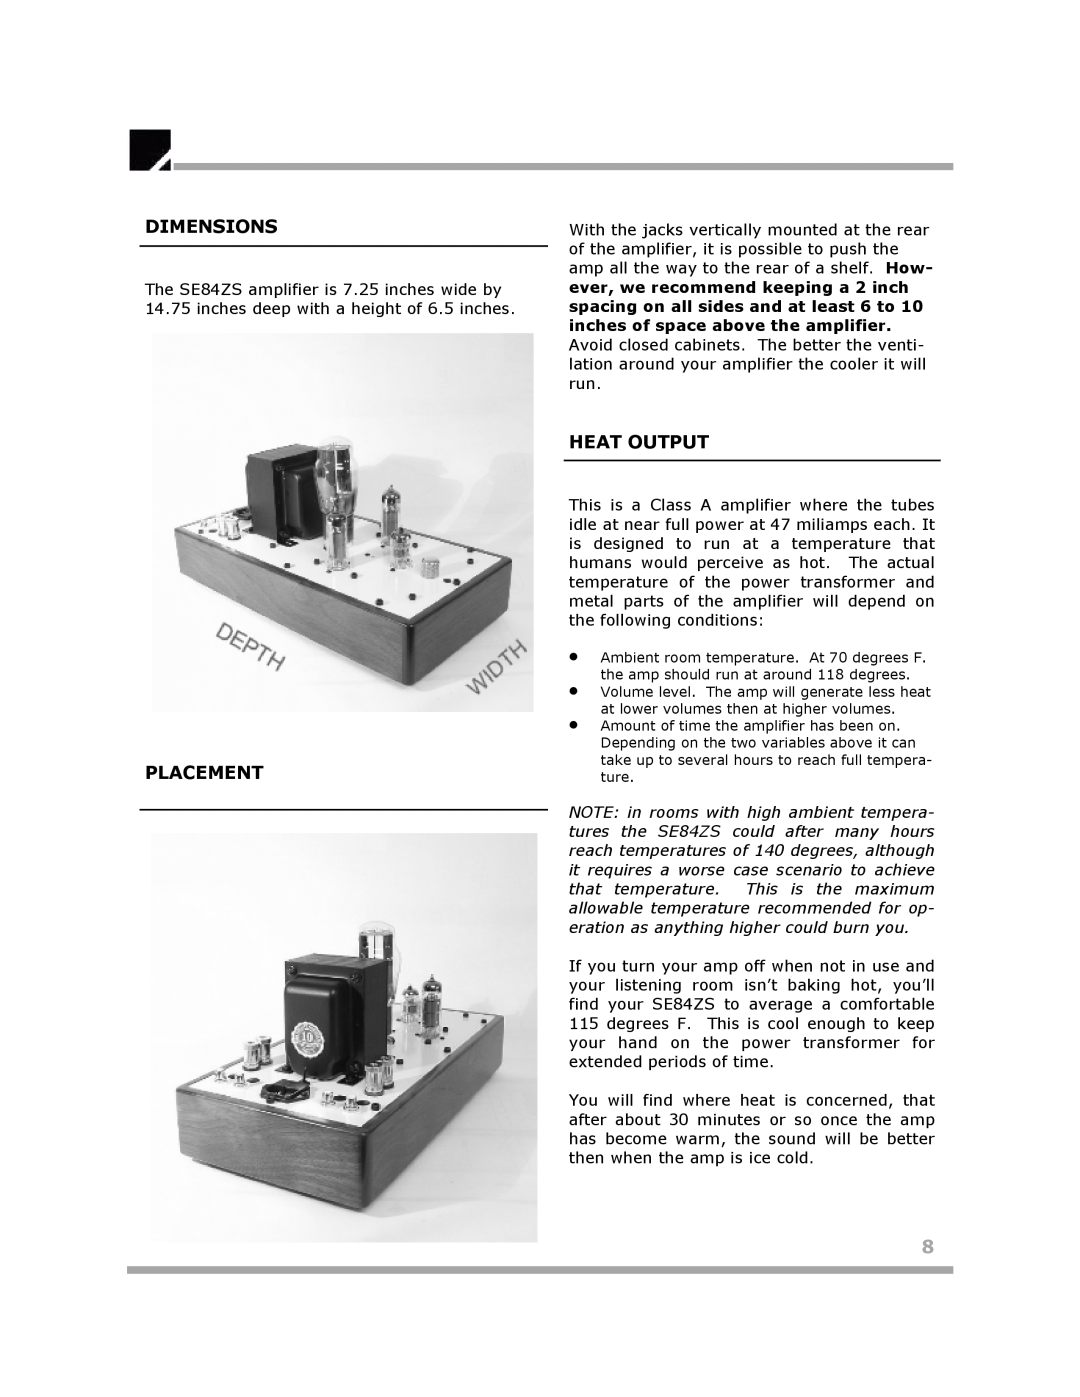 Klipsch SE84ZS owner manual Dimensions, Placement, Heat Output 